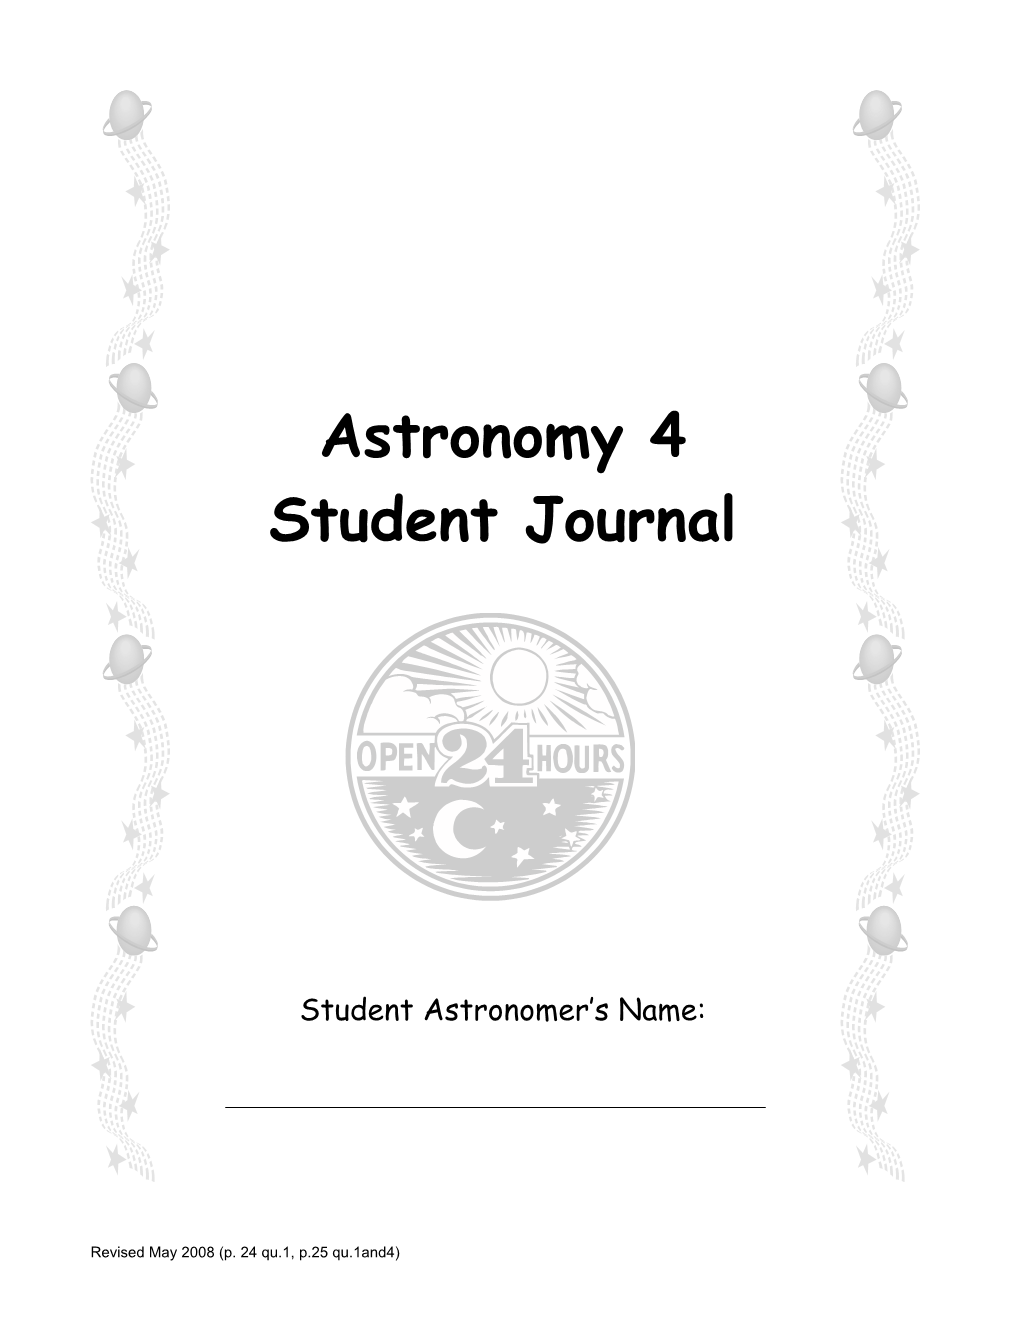 Astronomy 4 Student Journal